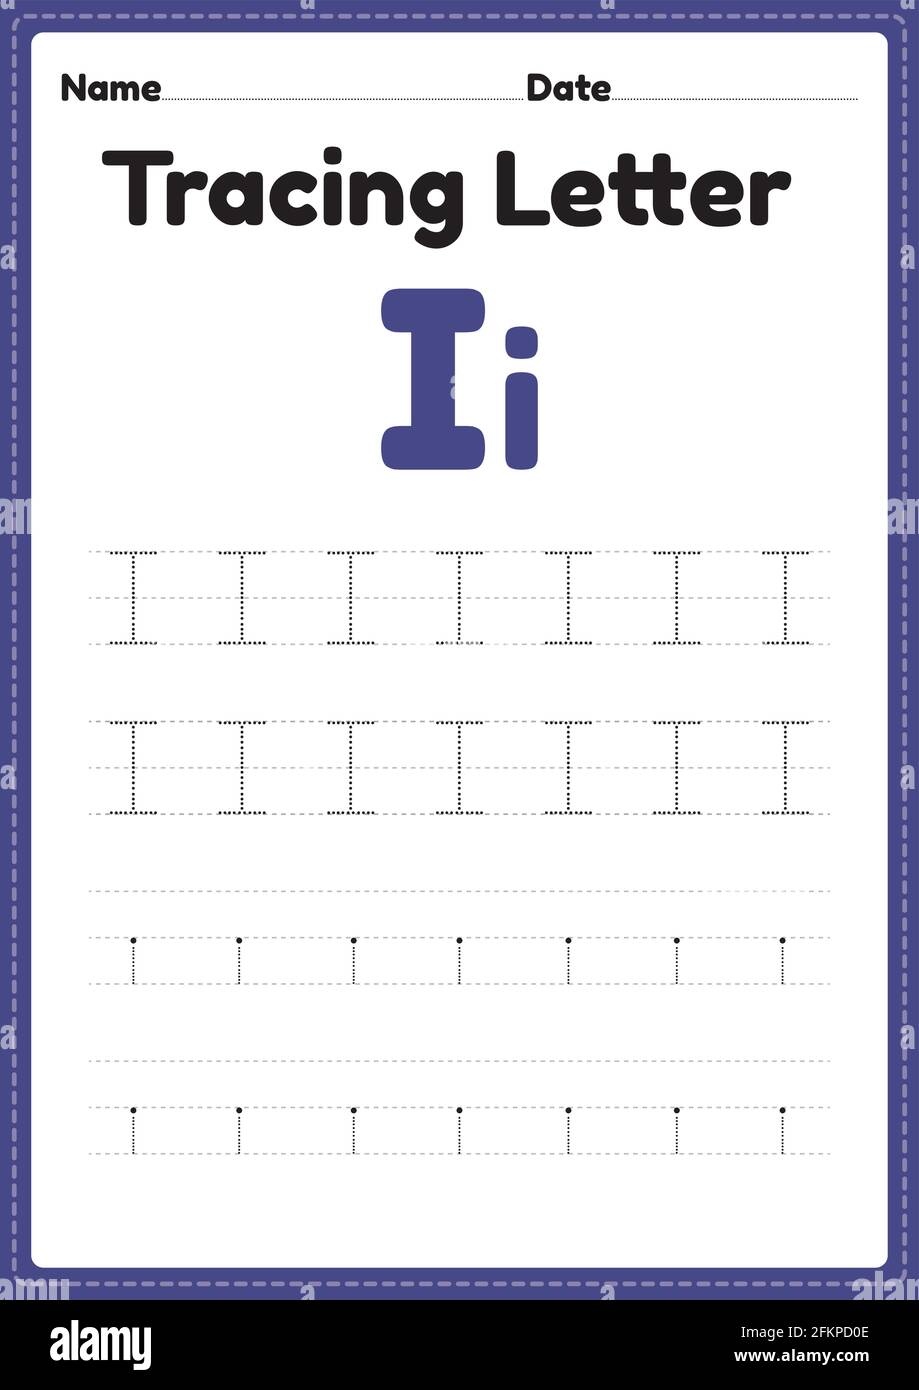 Tracing letter i alphabet worksheet for kindergarten and preschool With Letter I Template For Preschool